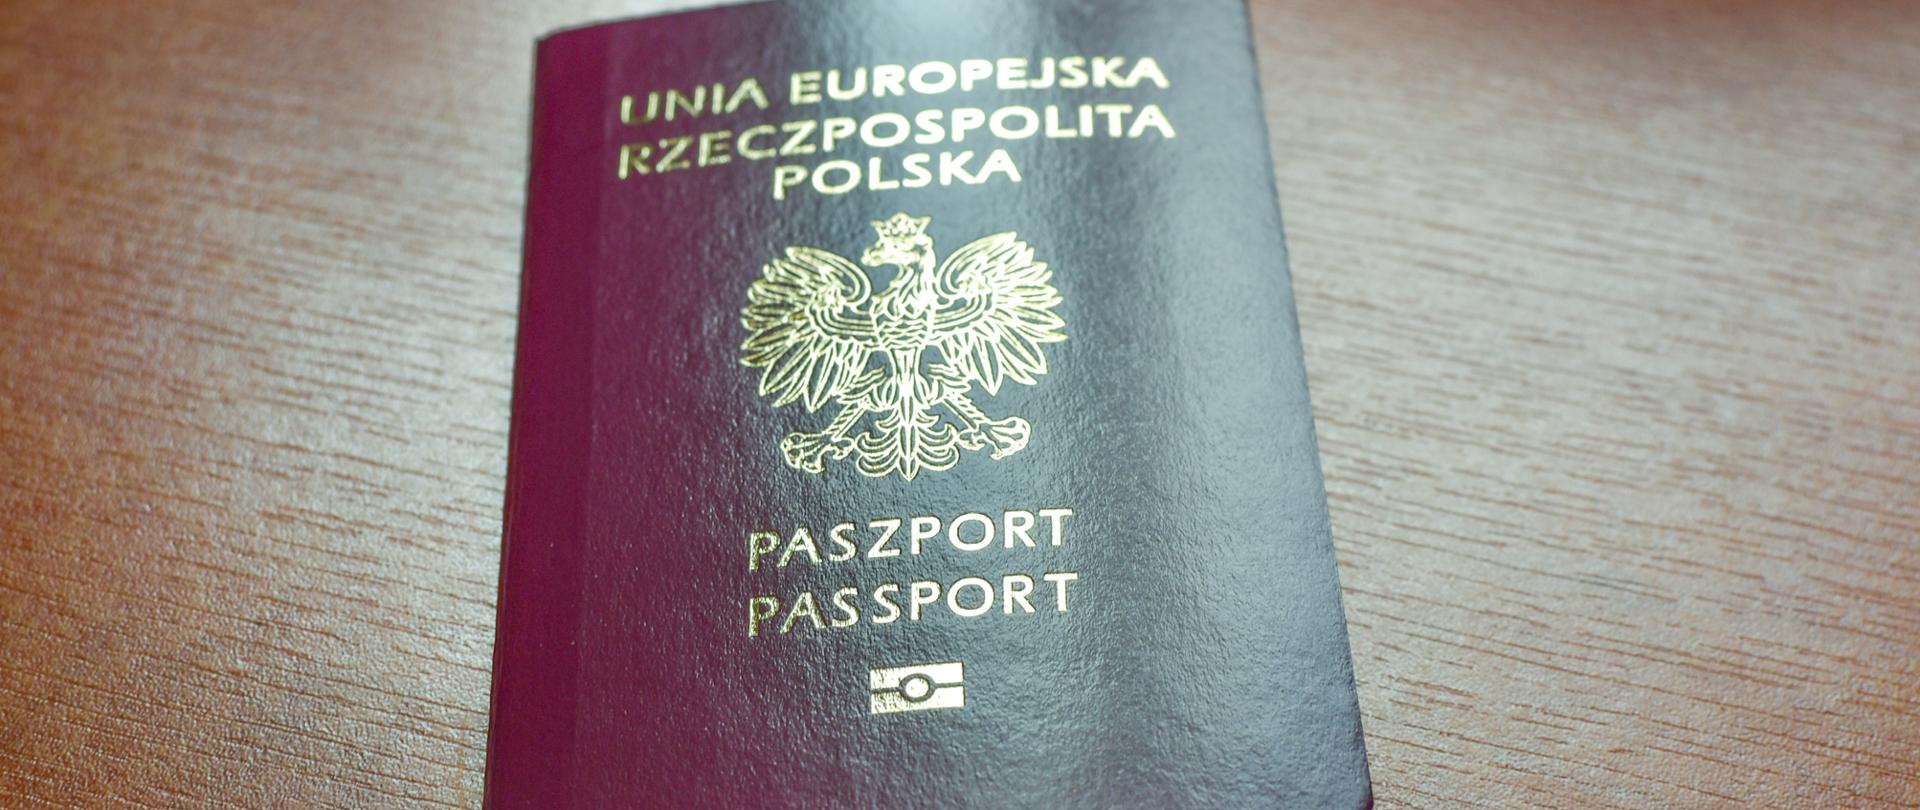 paszport na stole